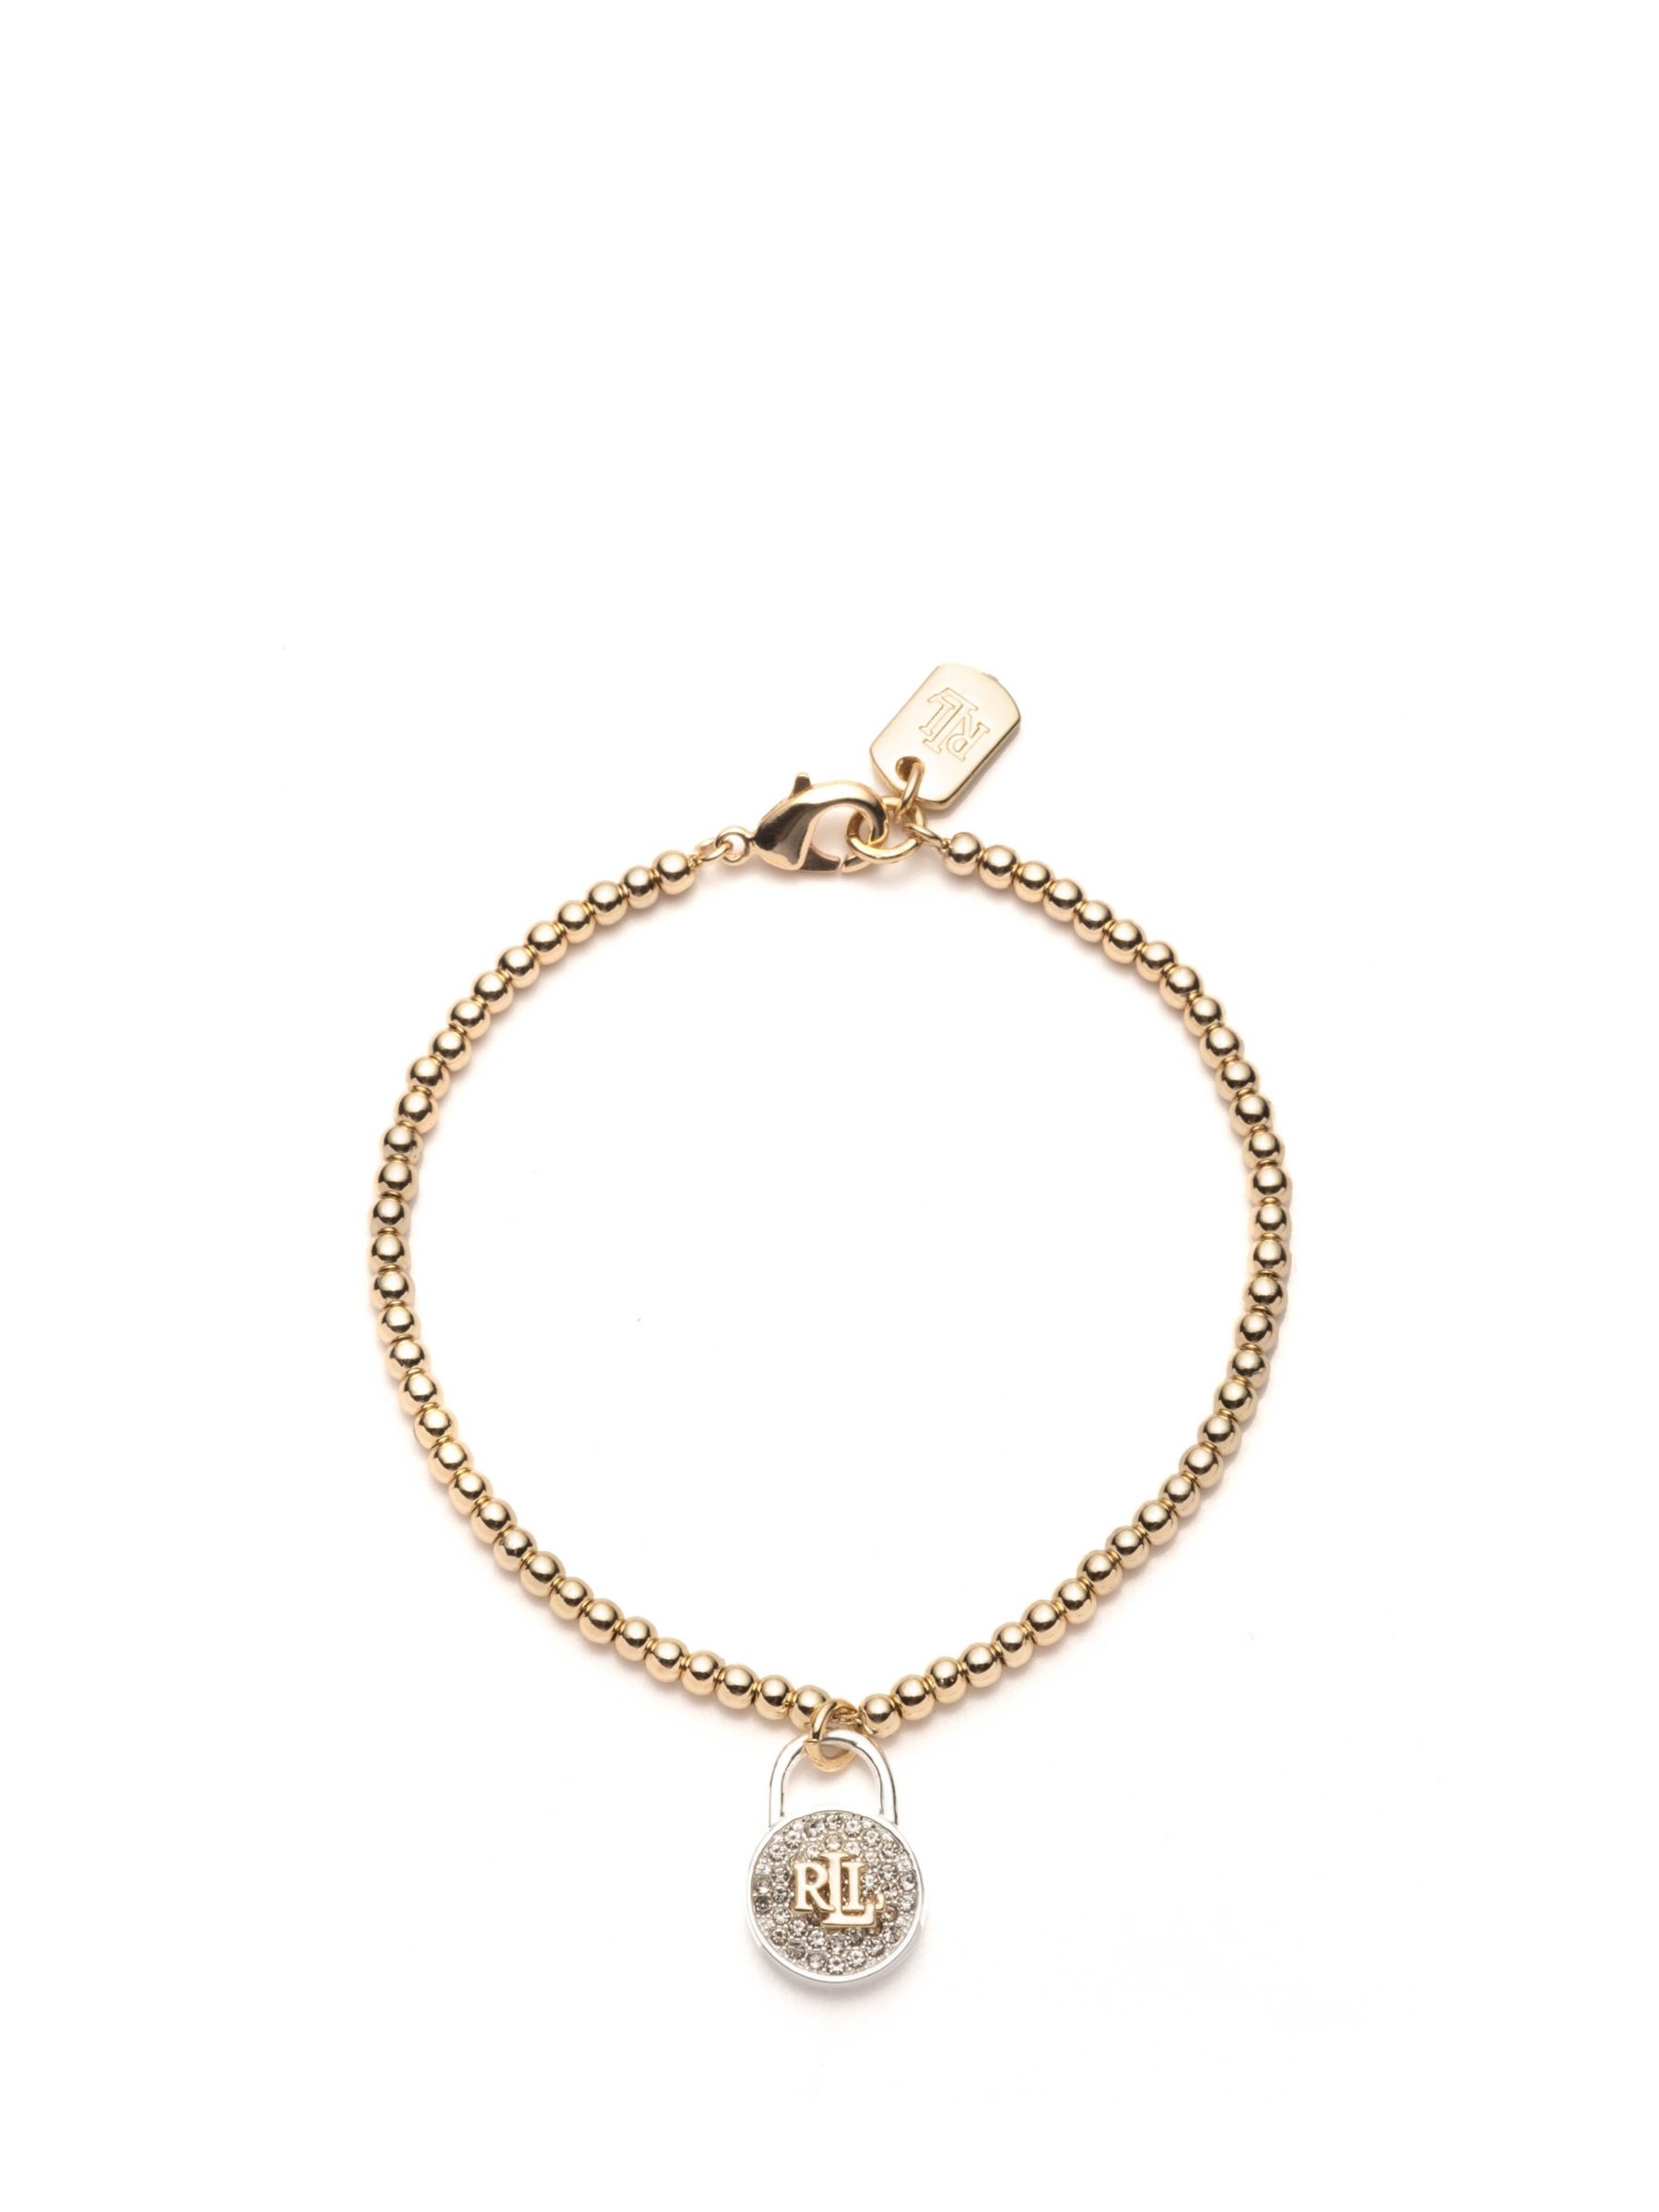 Lauren Ralph Lauren Flex Charm Beaded Bracelet, Gold/Silver